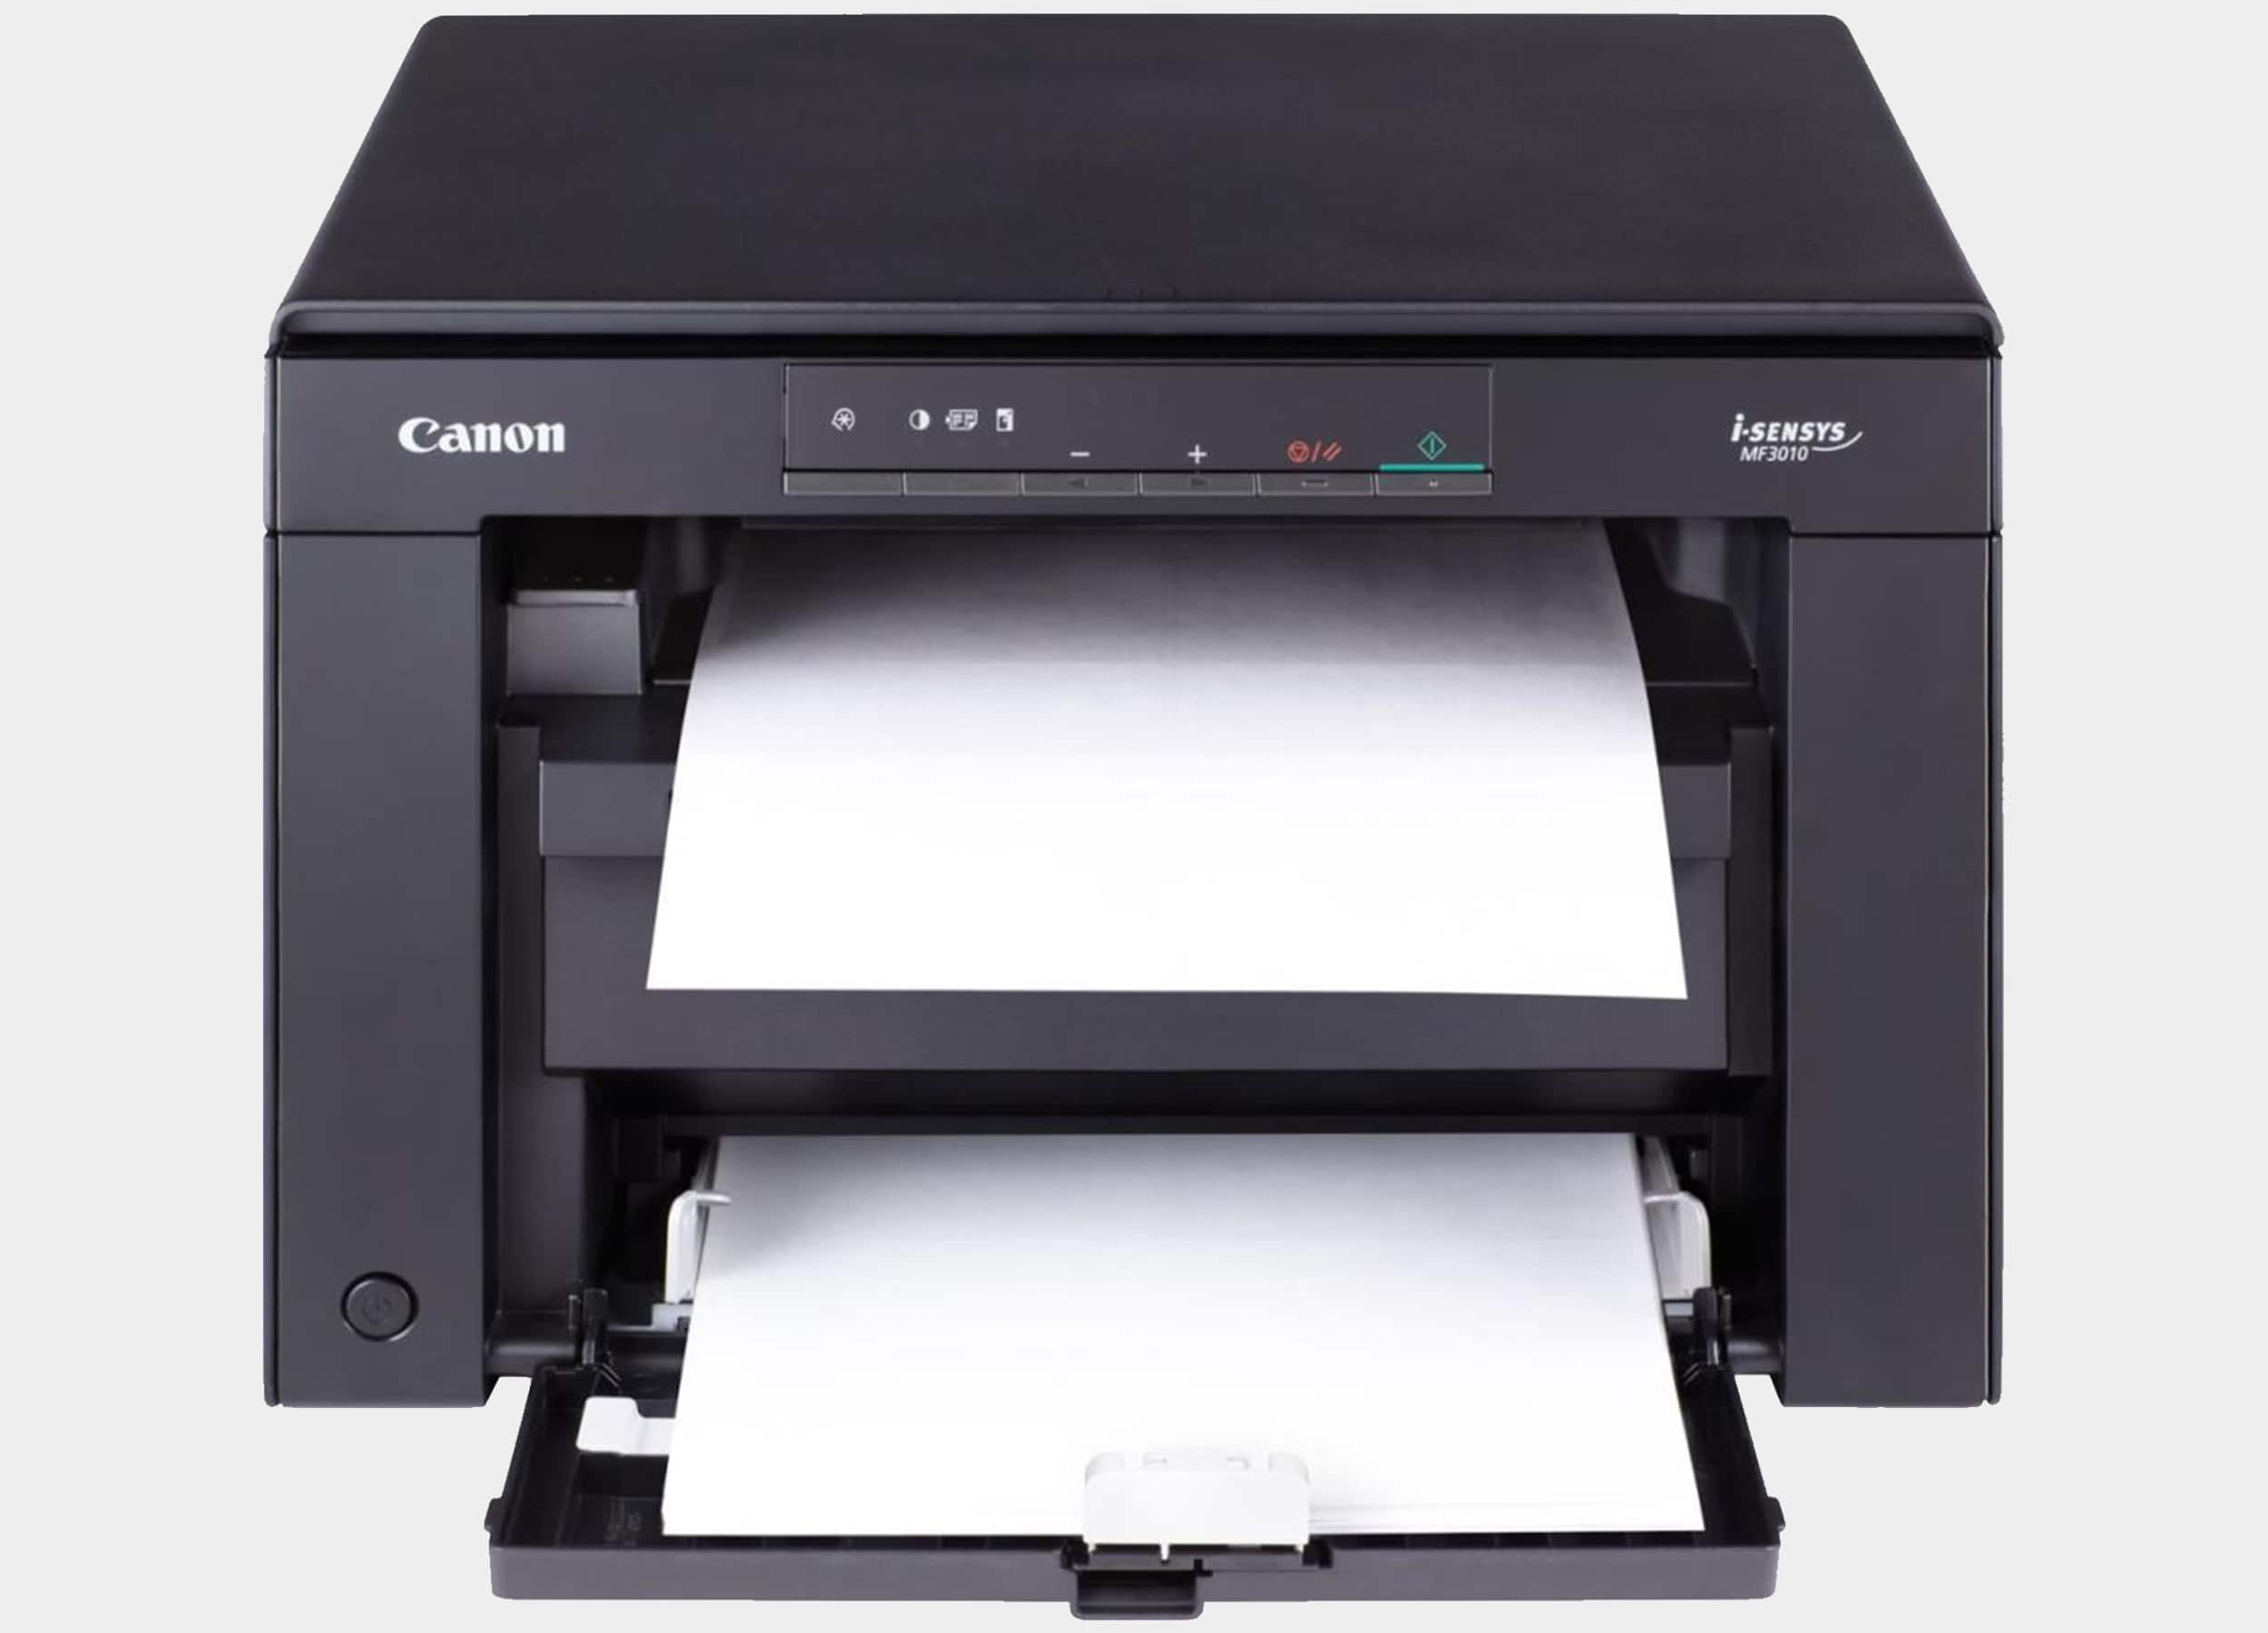 Canon i-SENSYS MF3010 Laser Printer 4x1